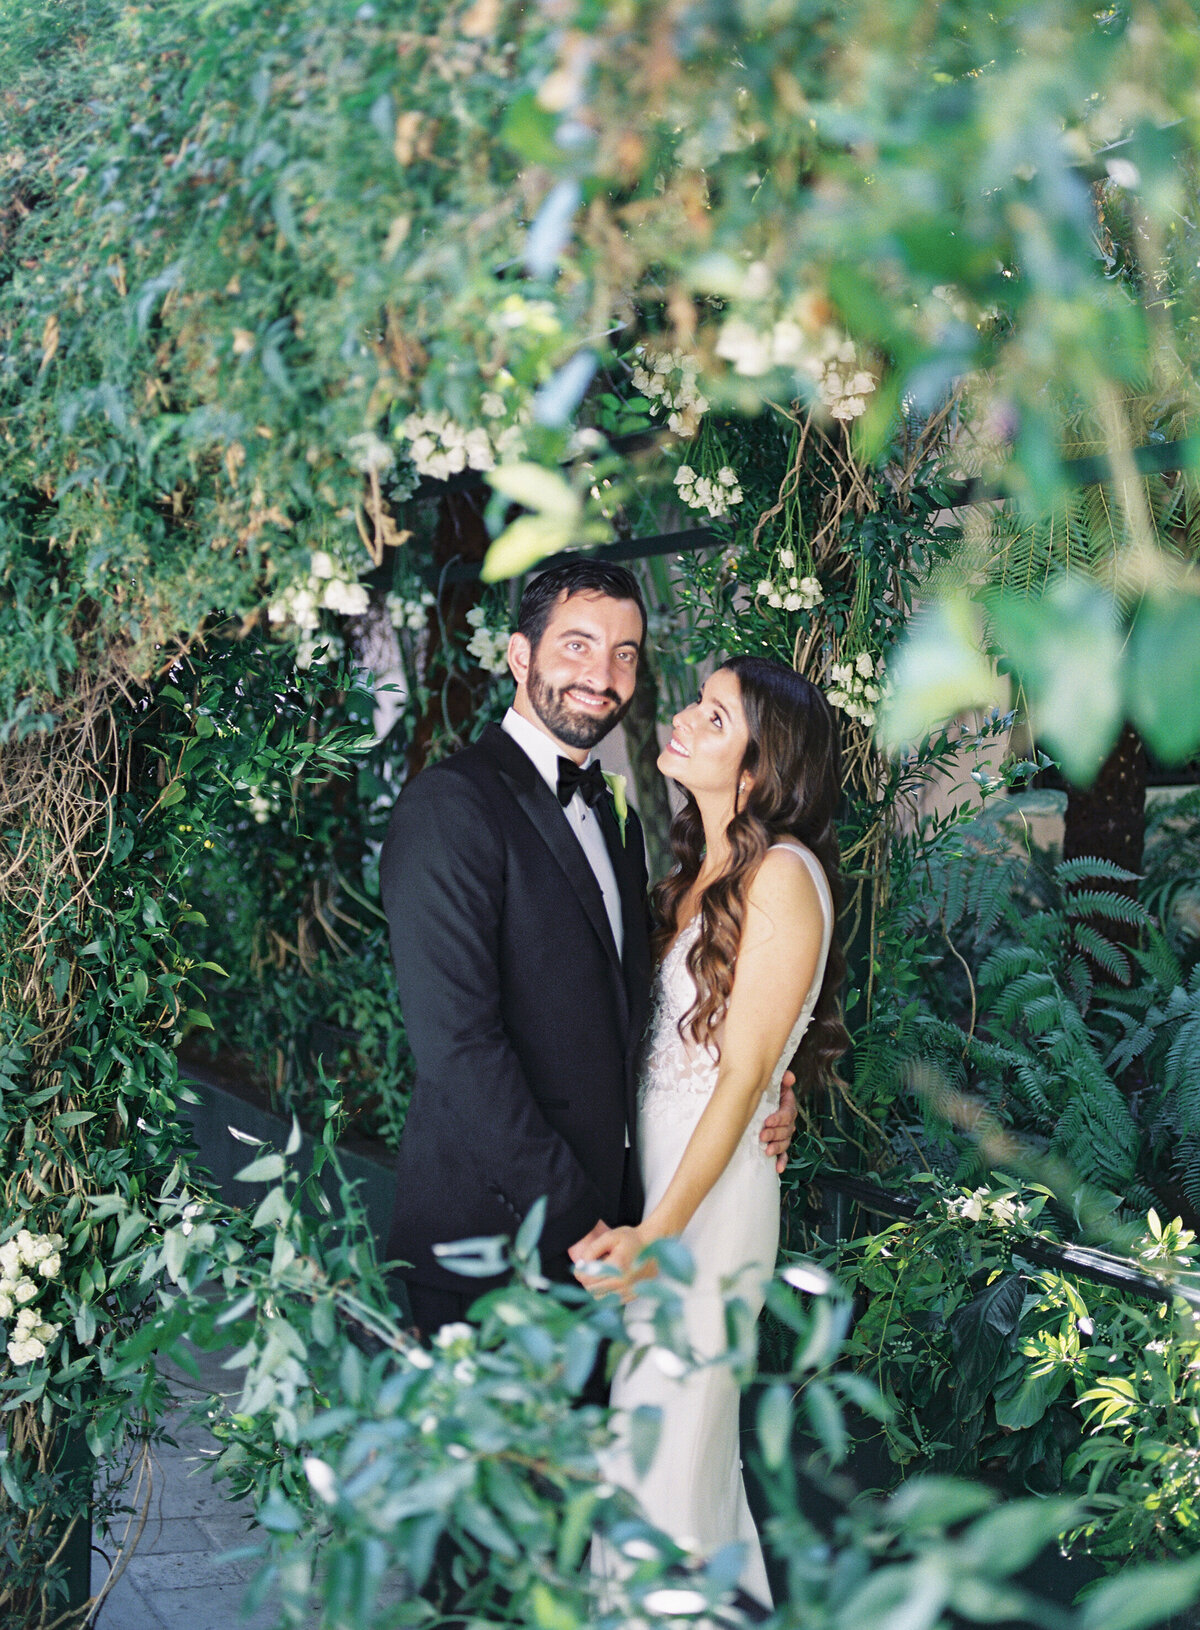 Jessica Rieke Photography - Adam and Rachel Hollander Wedding-350